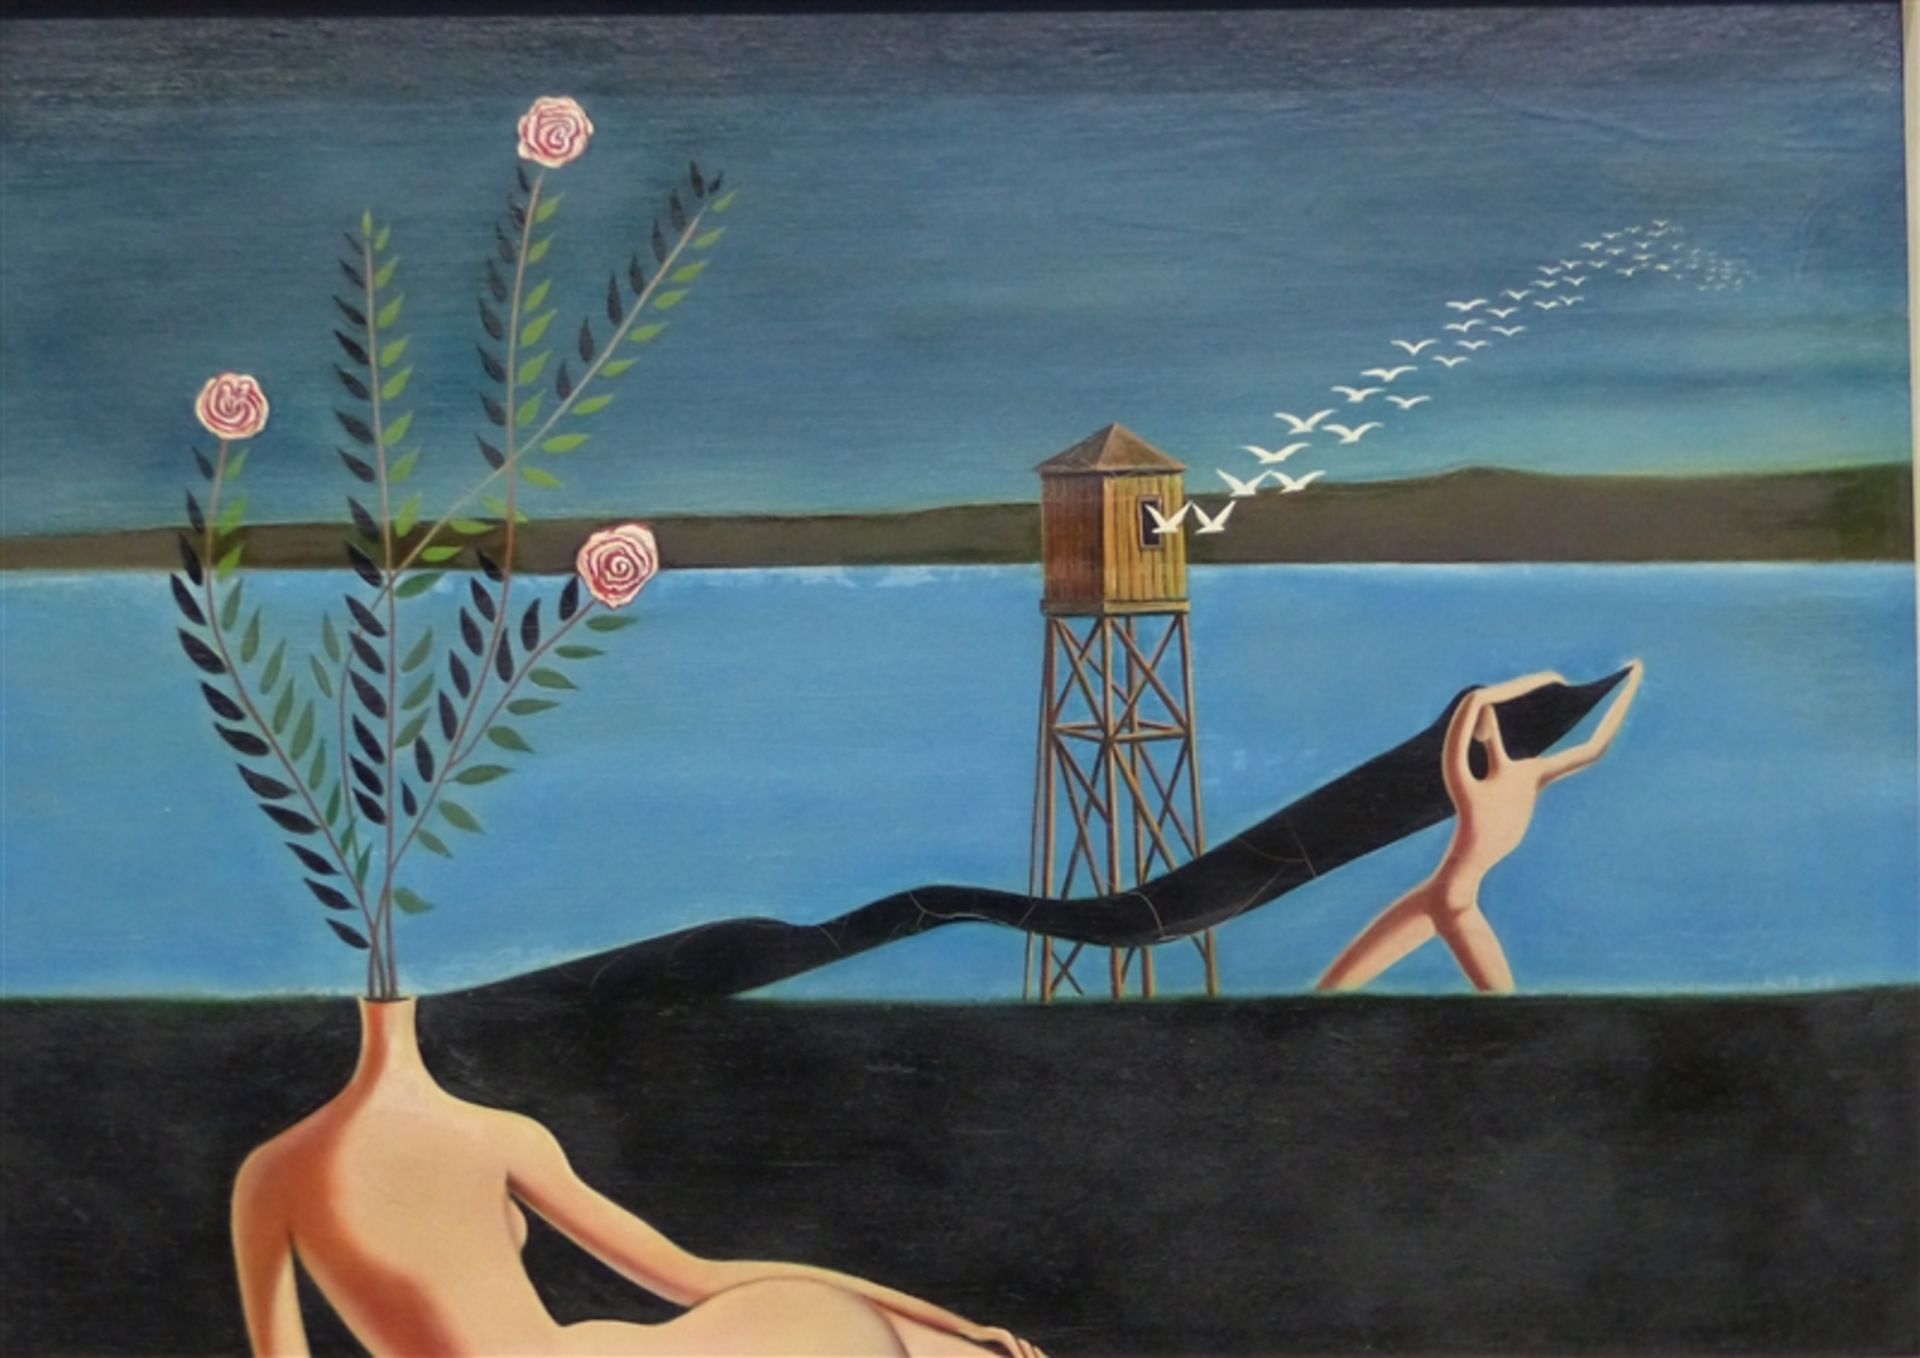 Böck, Rolf 20. Jh., Öl auf Malerpappe, Surreales Motiv, "Umzug ins Vergessen", 1964, 24,5x33,5 cm,